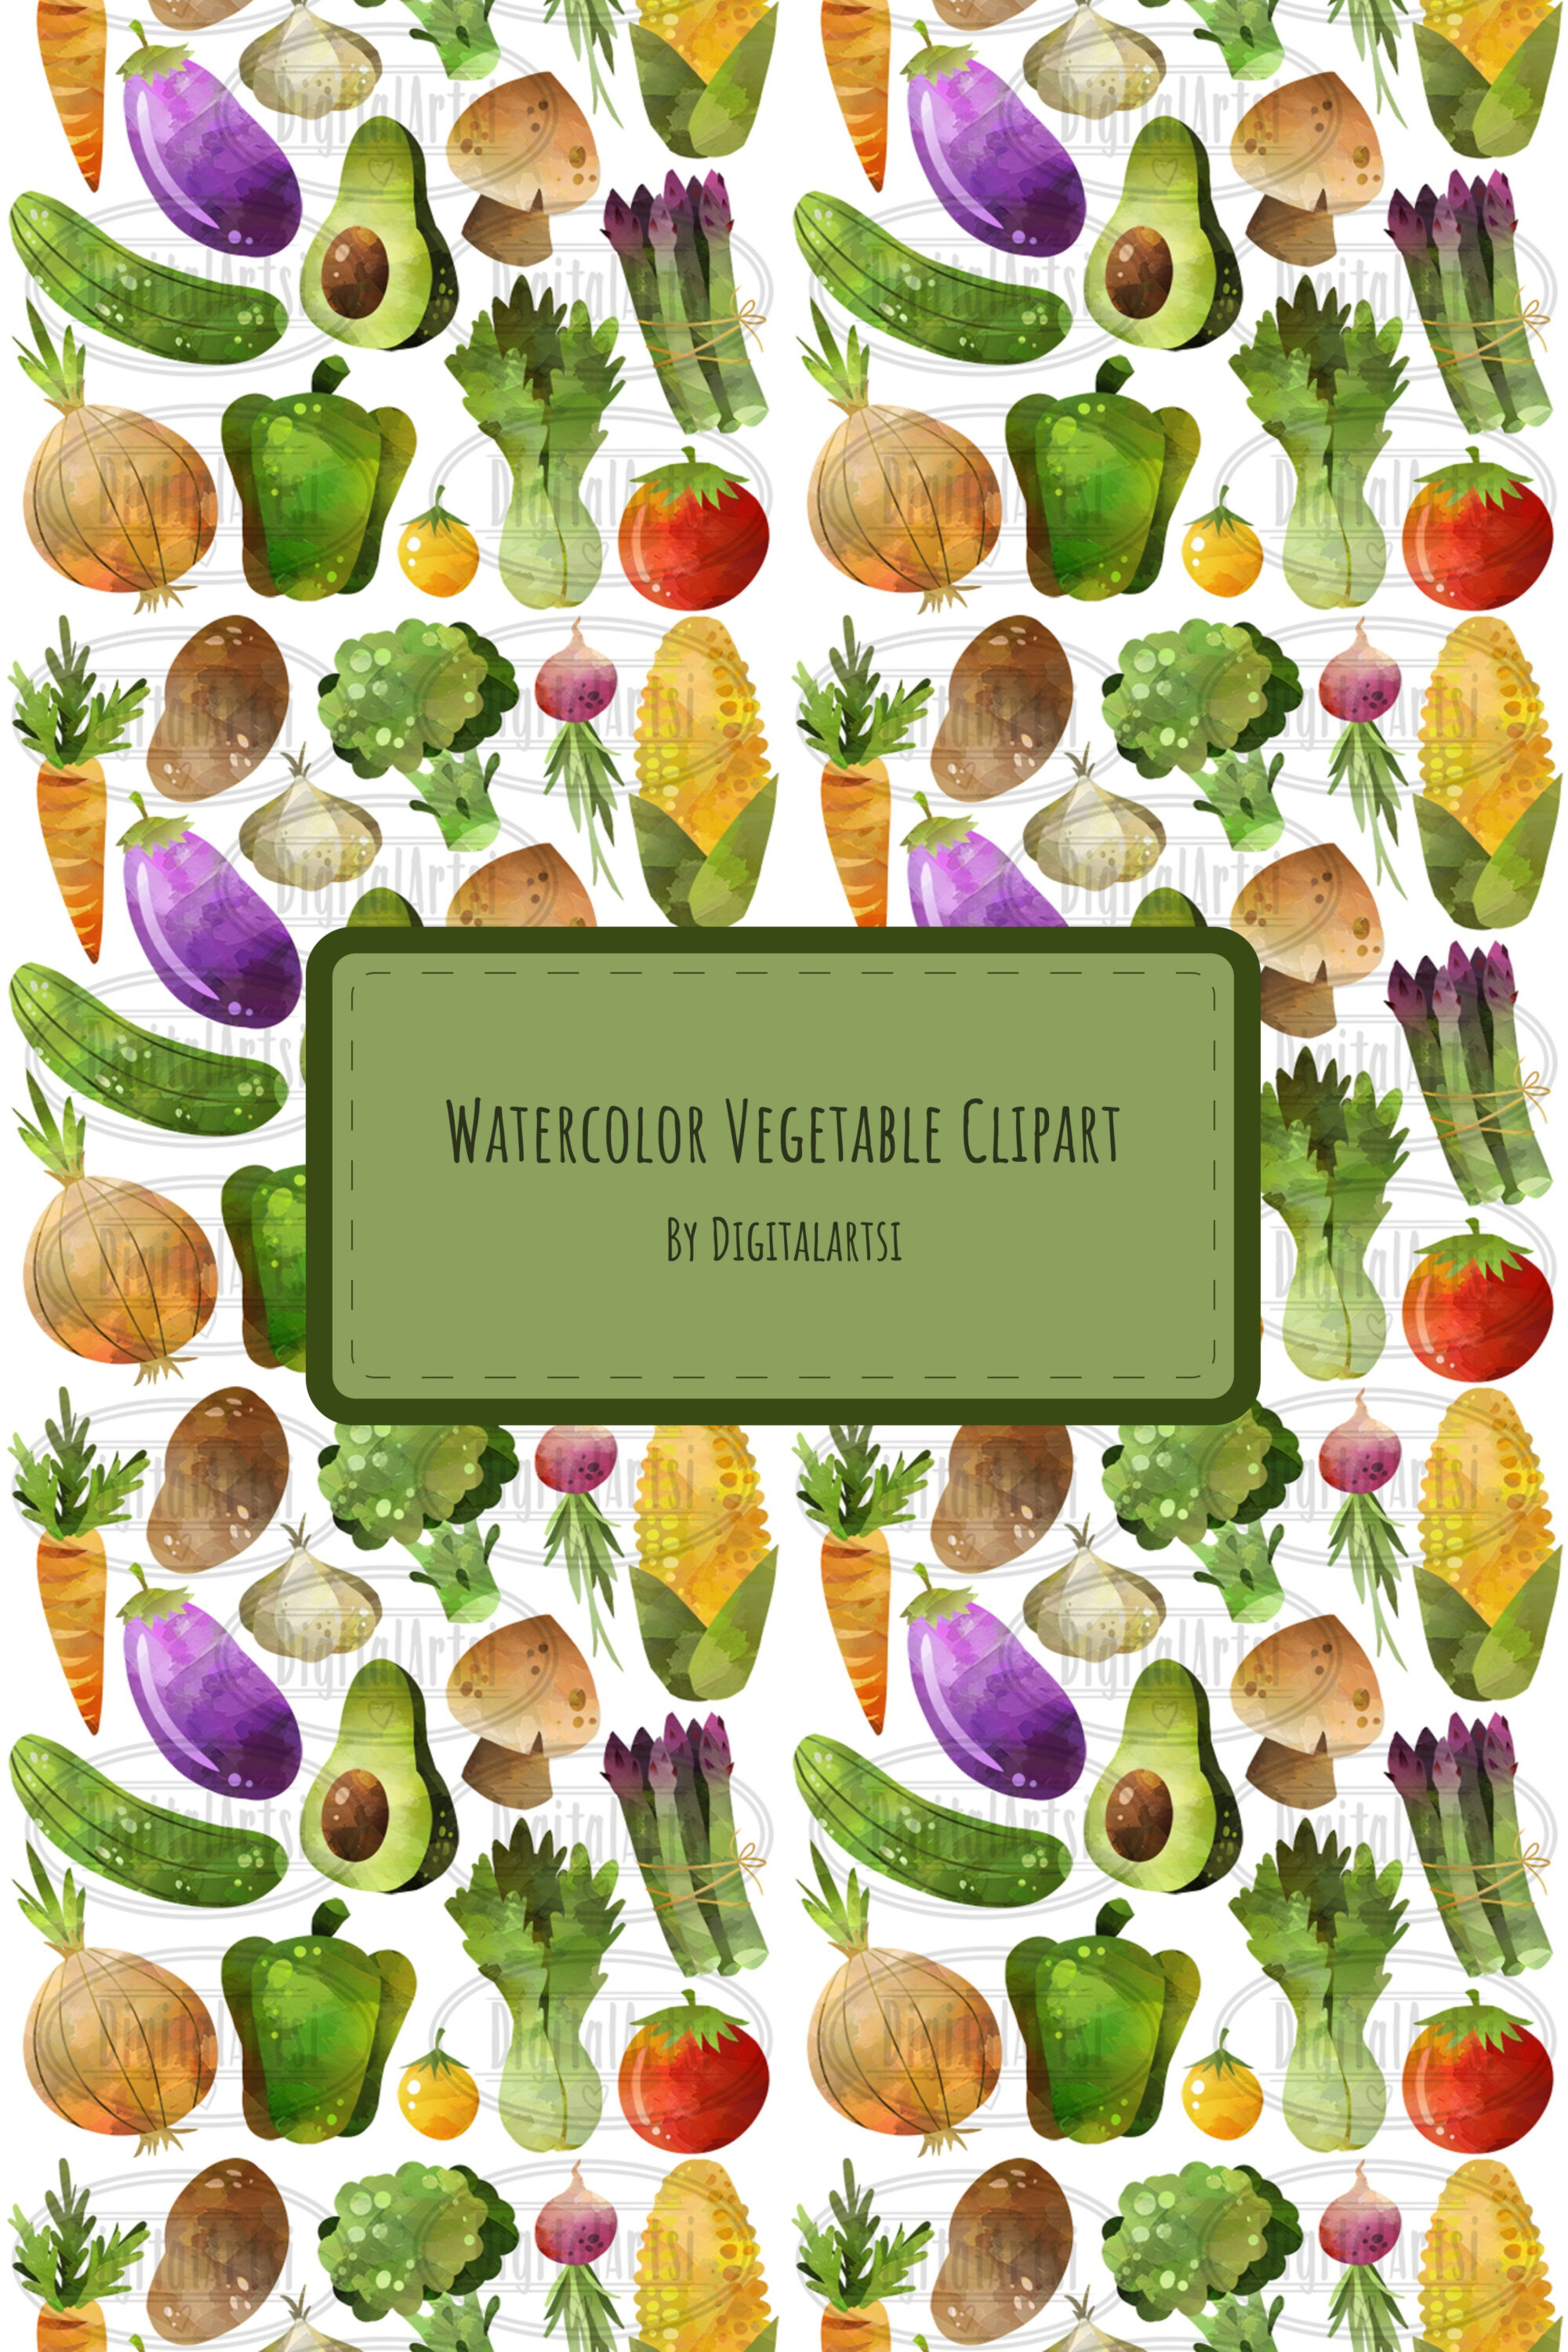 Watercolor vegetable clipart of pinterest.